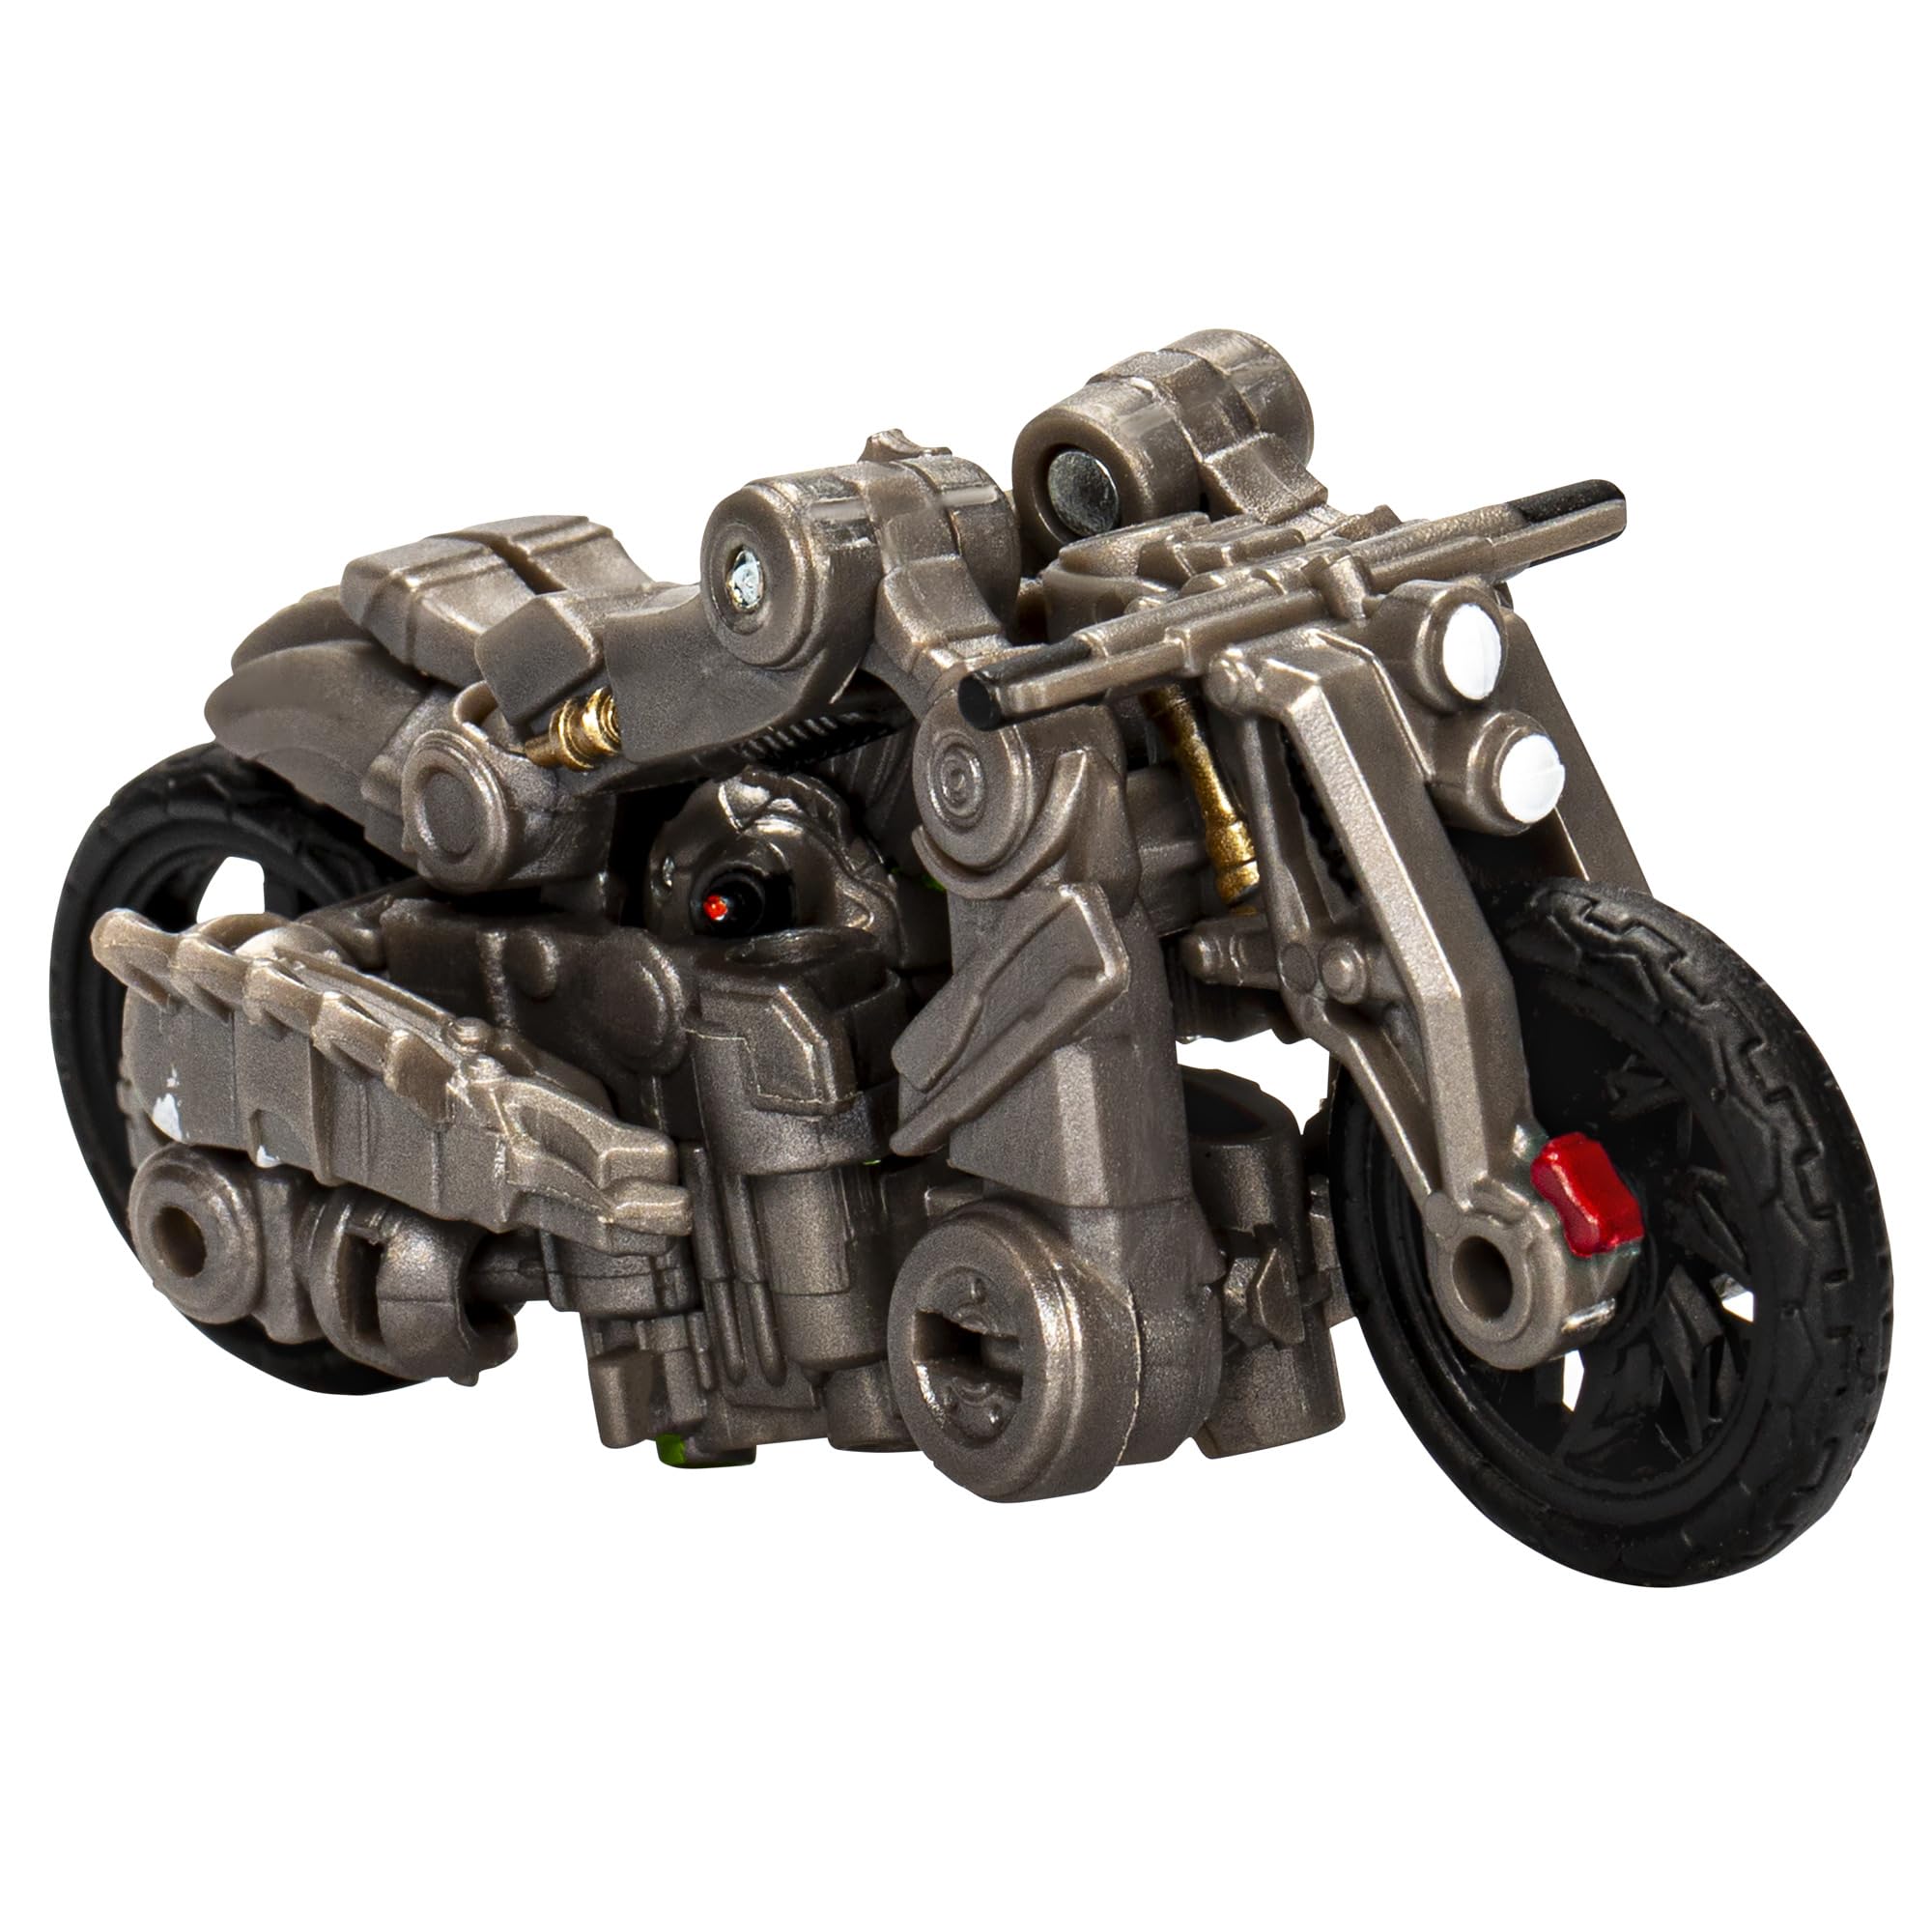 Transformers Toys Studio Series Core The Last Knight Decepticon Mohawk, 3.5-inch Converting Action Figure, 8+